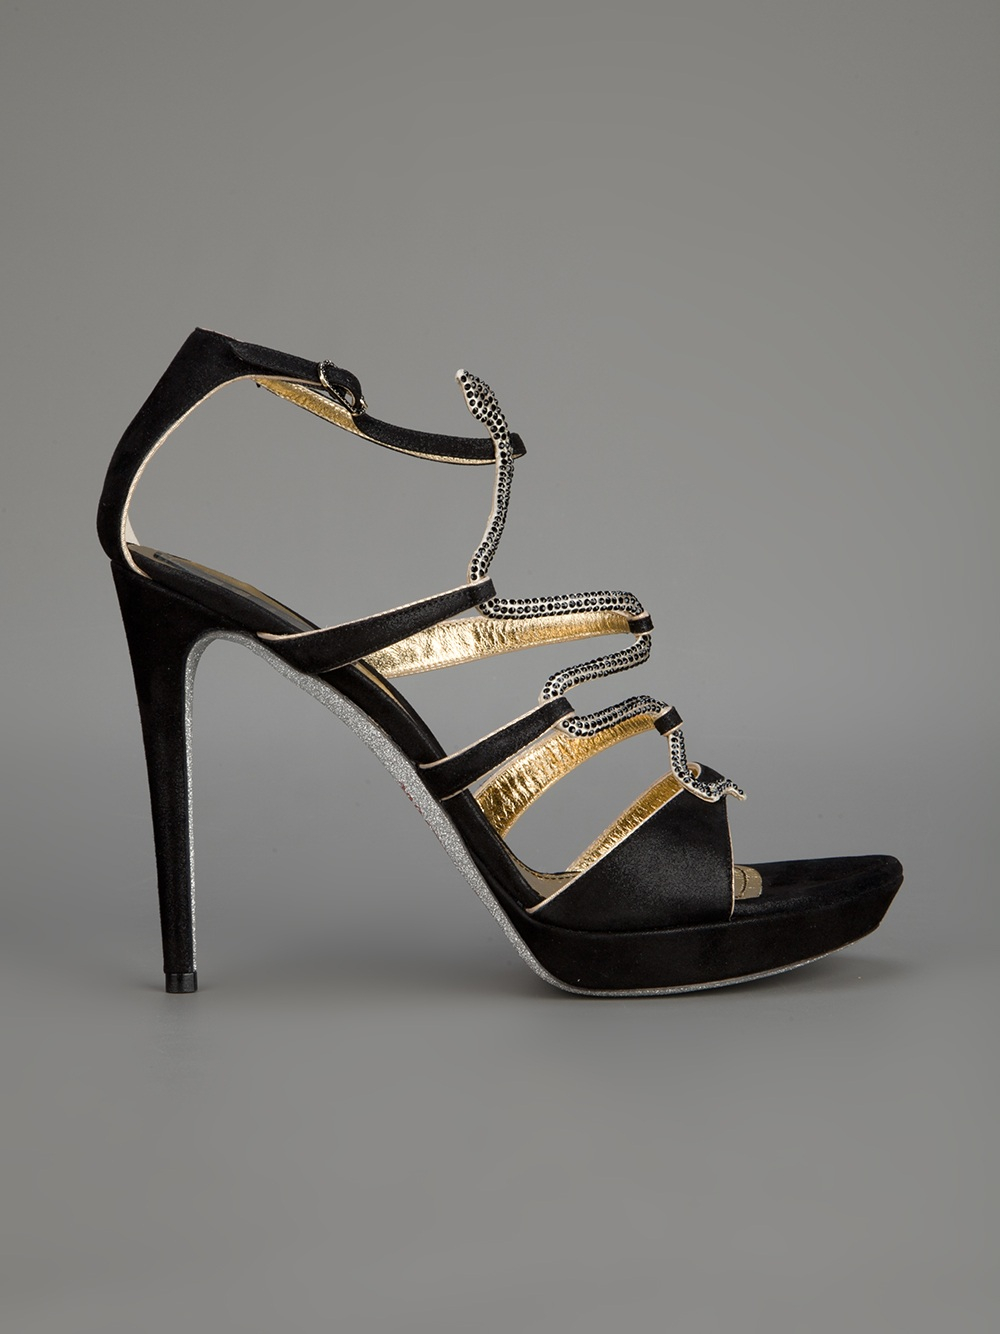 Lyst - Rene caovilla Swarovski Crystalembellished Leather Sandals in ...